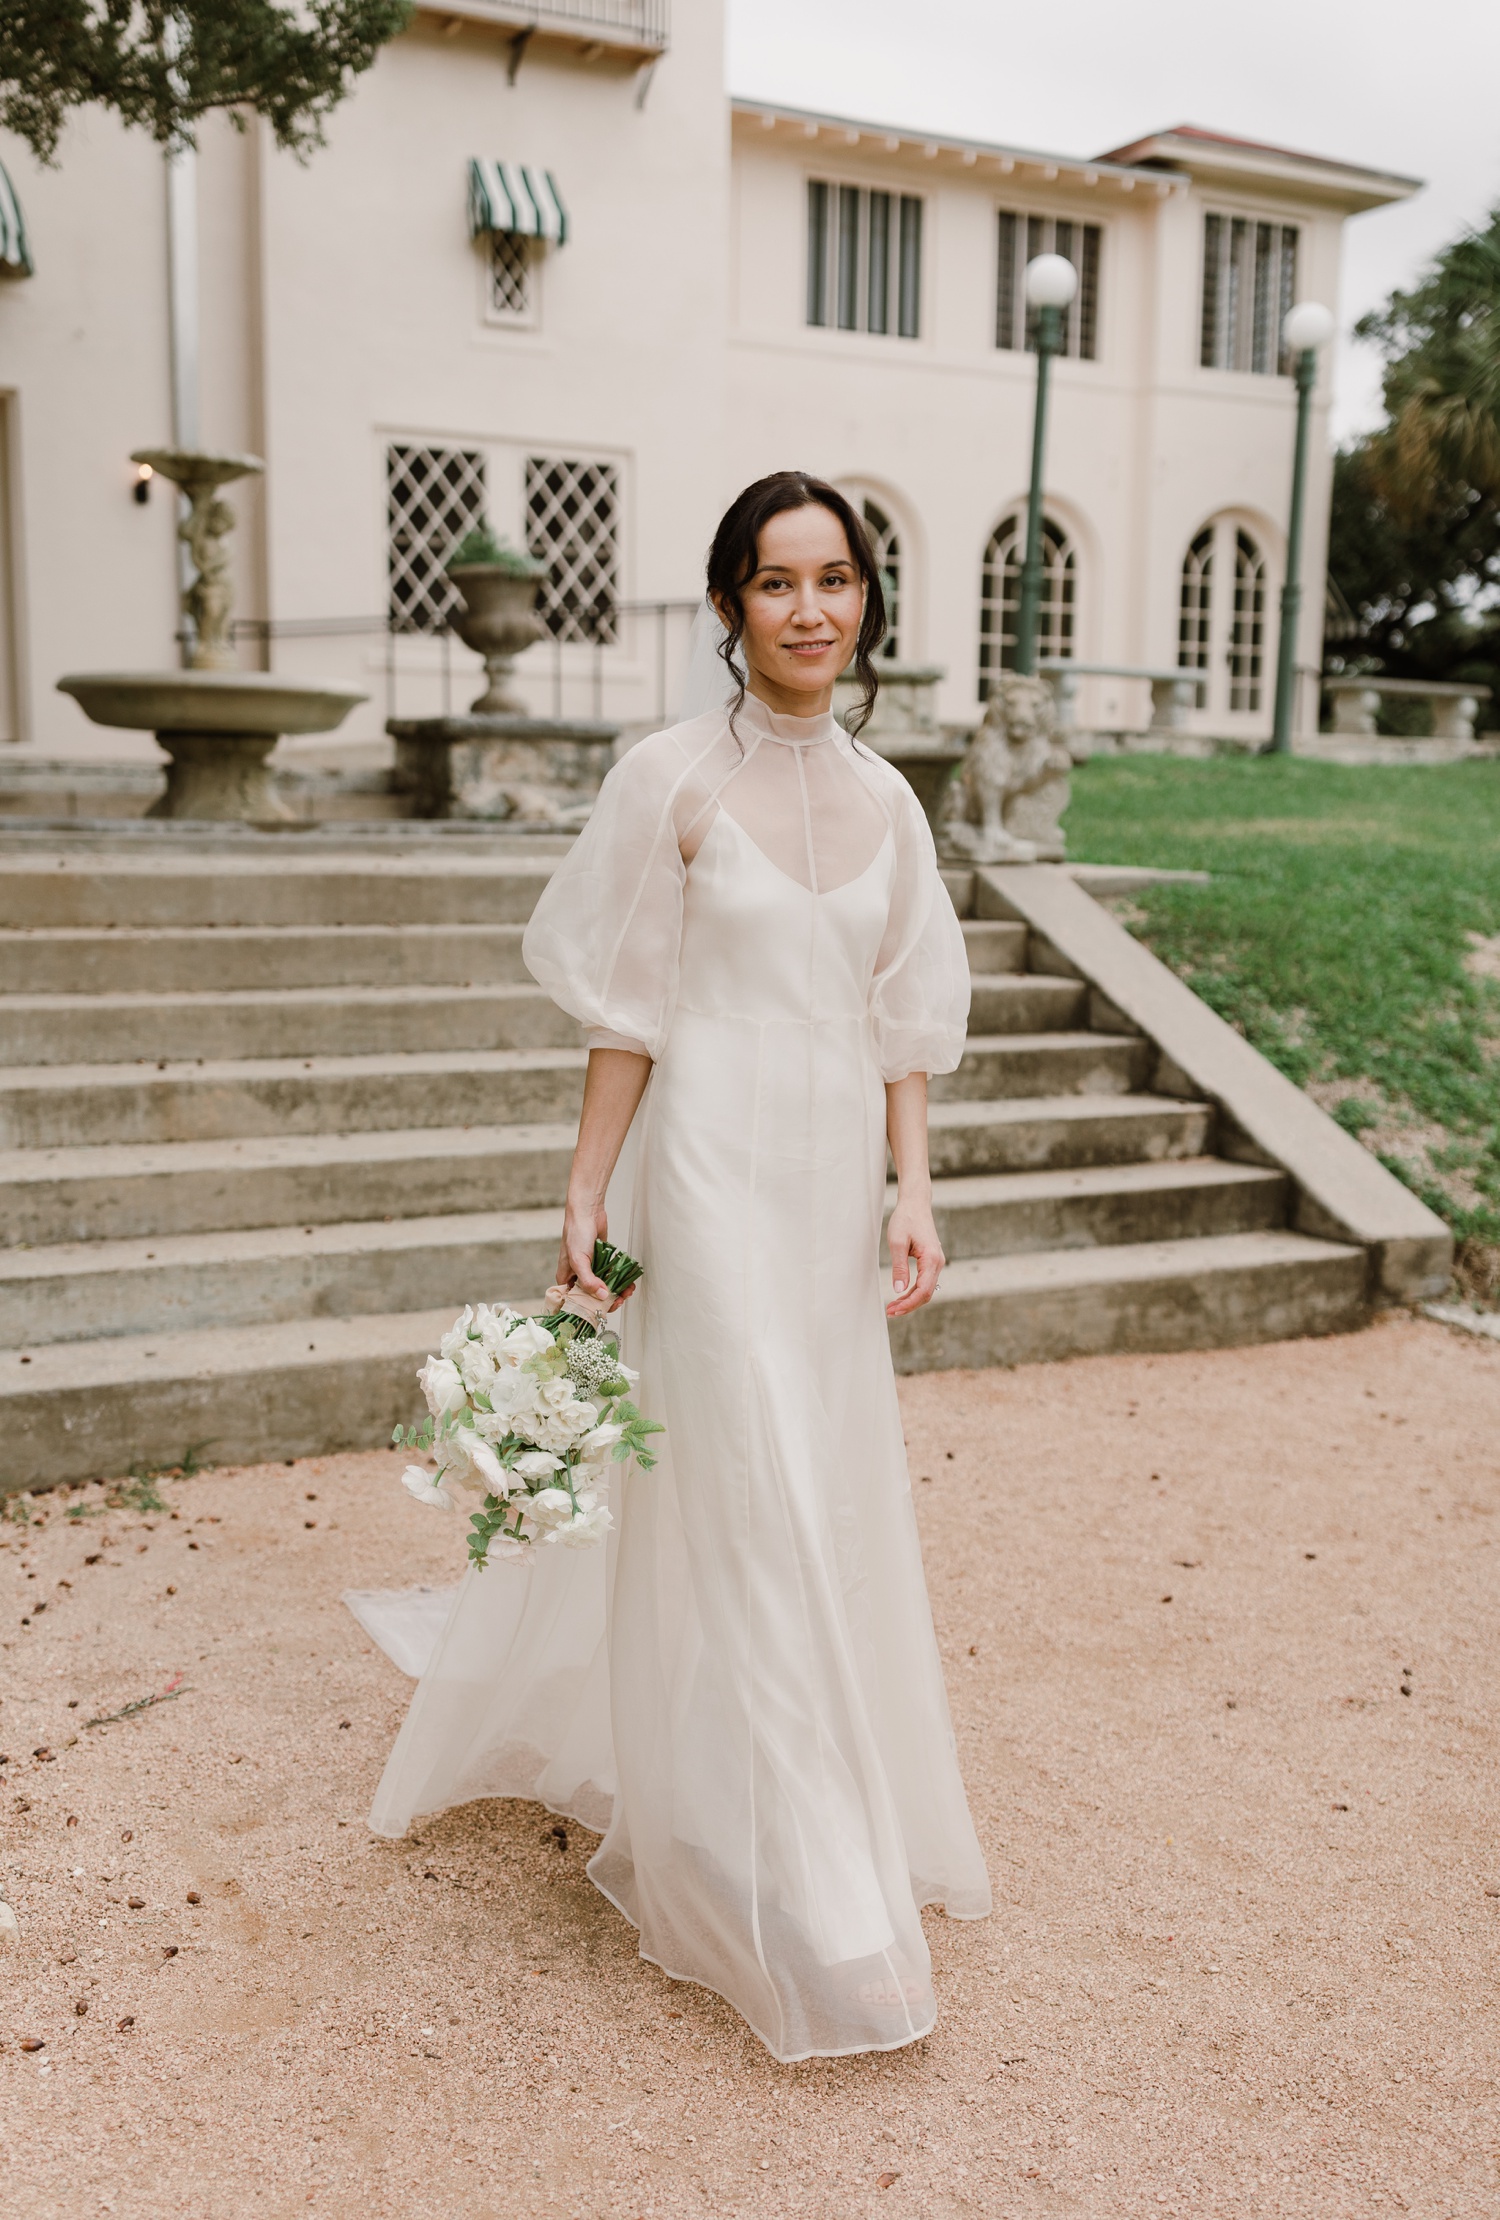 Bride wearing the Meiere Gown by Kamperett for her Austin wedding